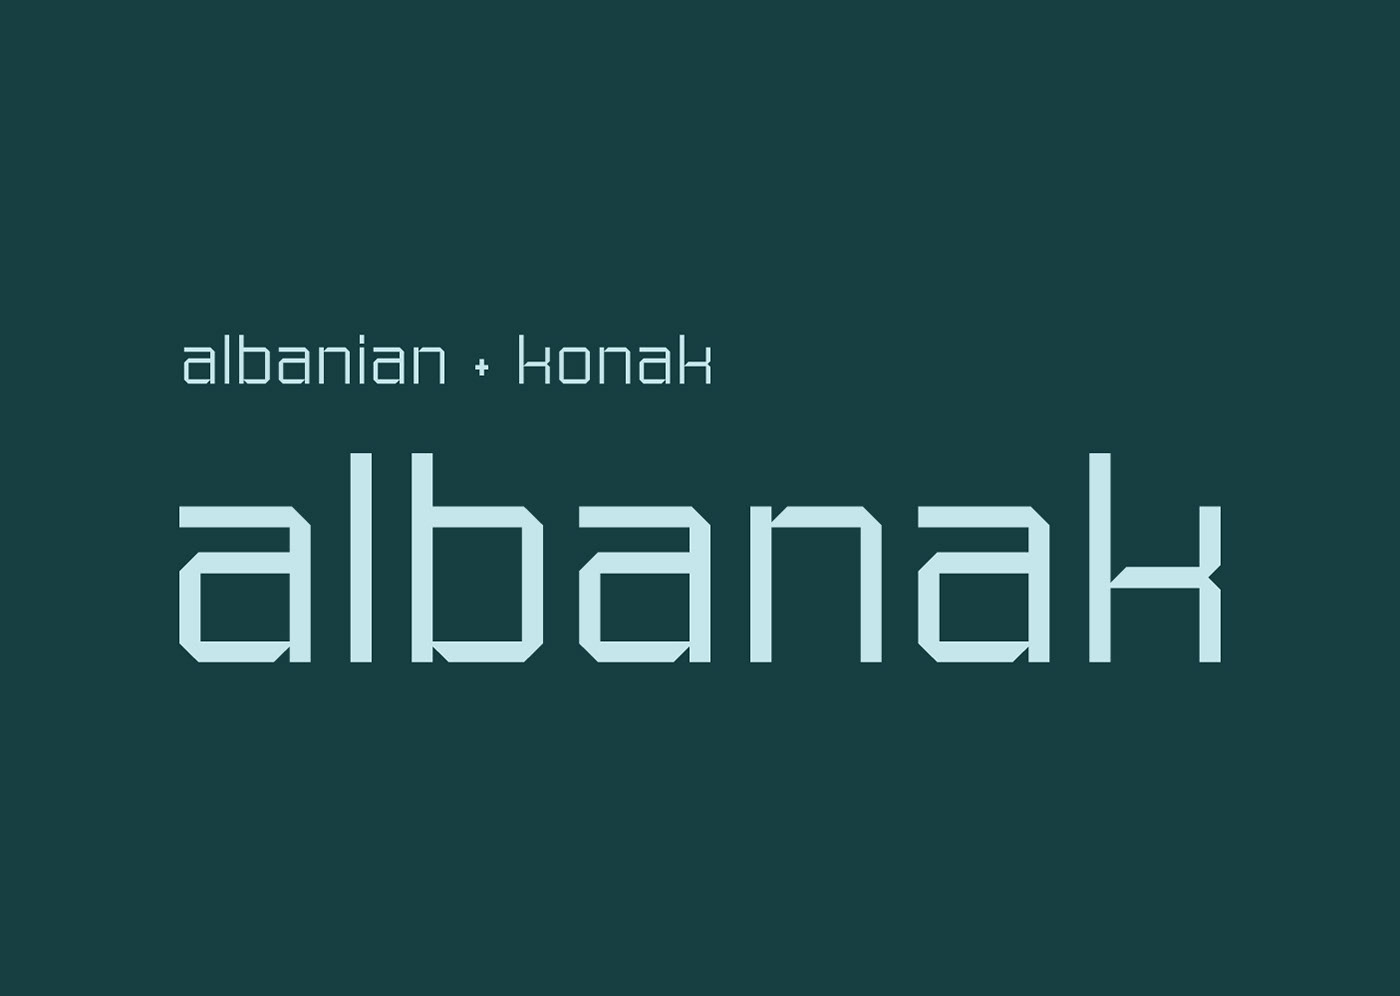 AGI albanak Albania app Haxhimurati llc logo municipality Tirana youth